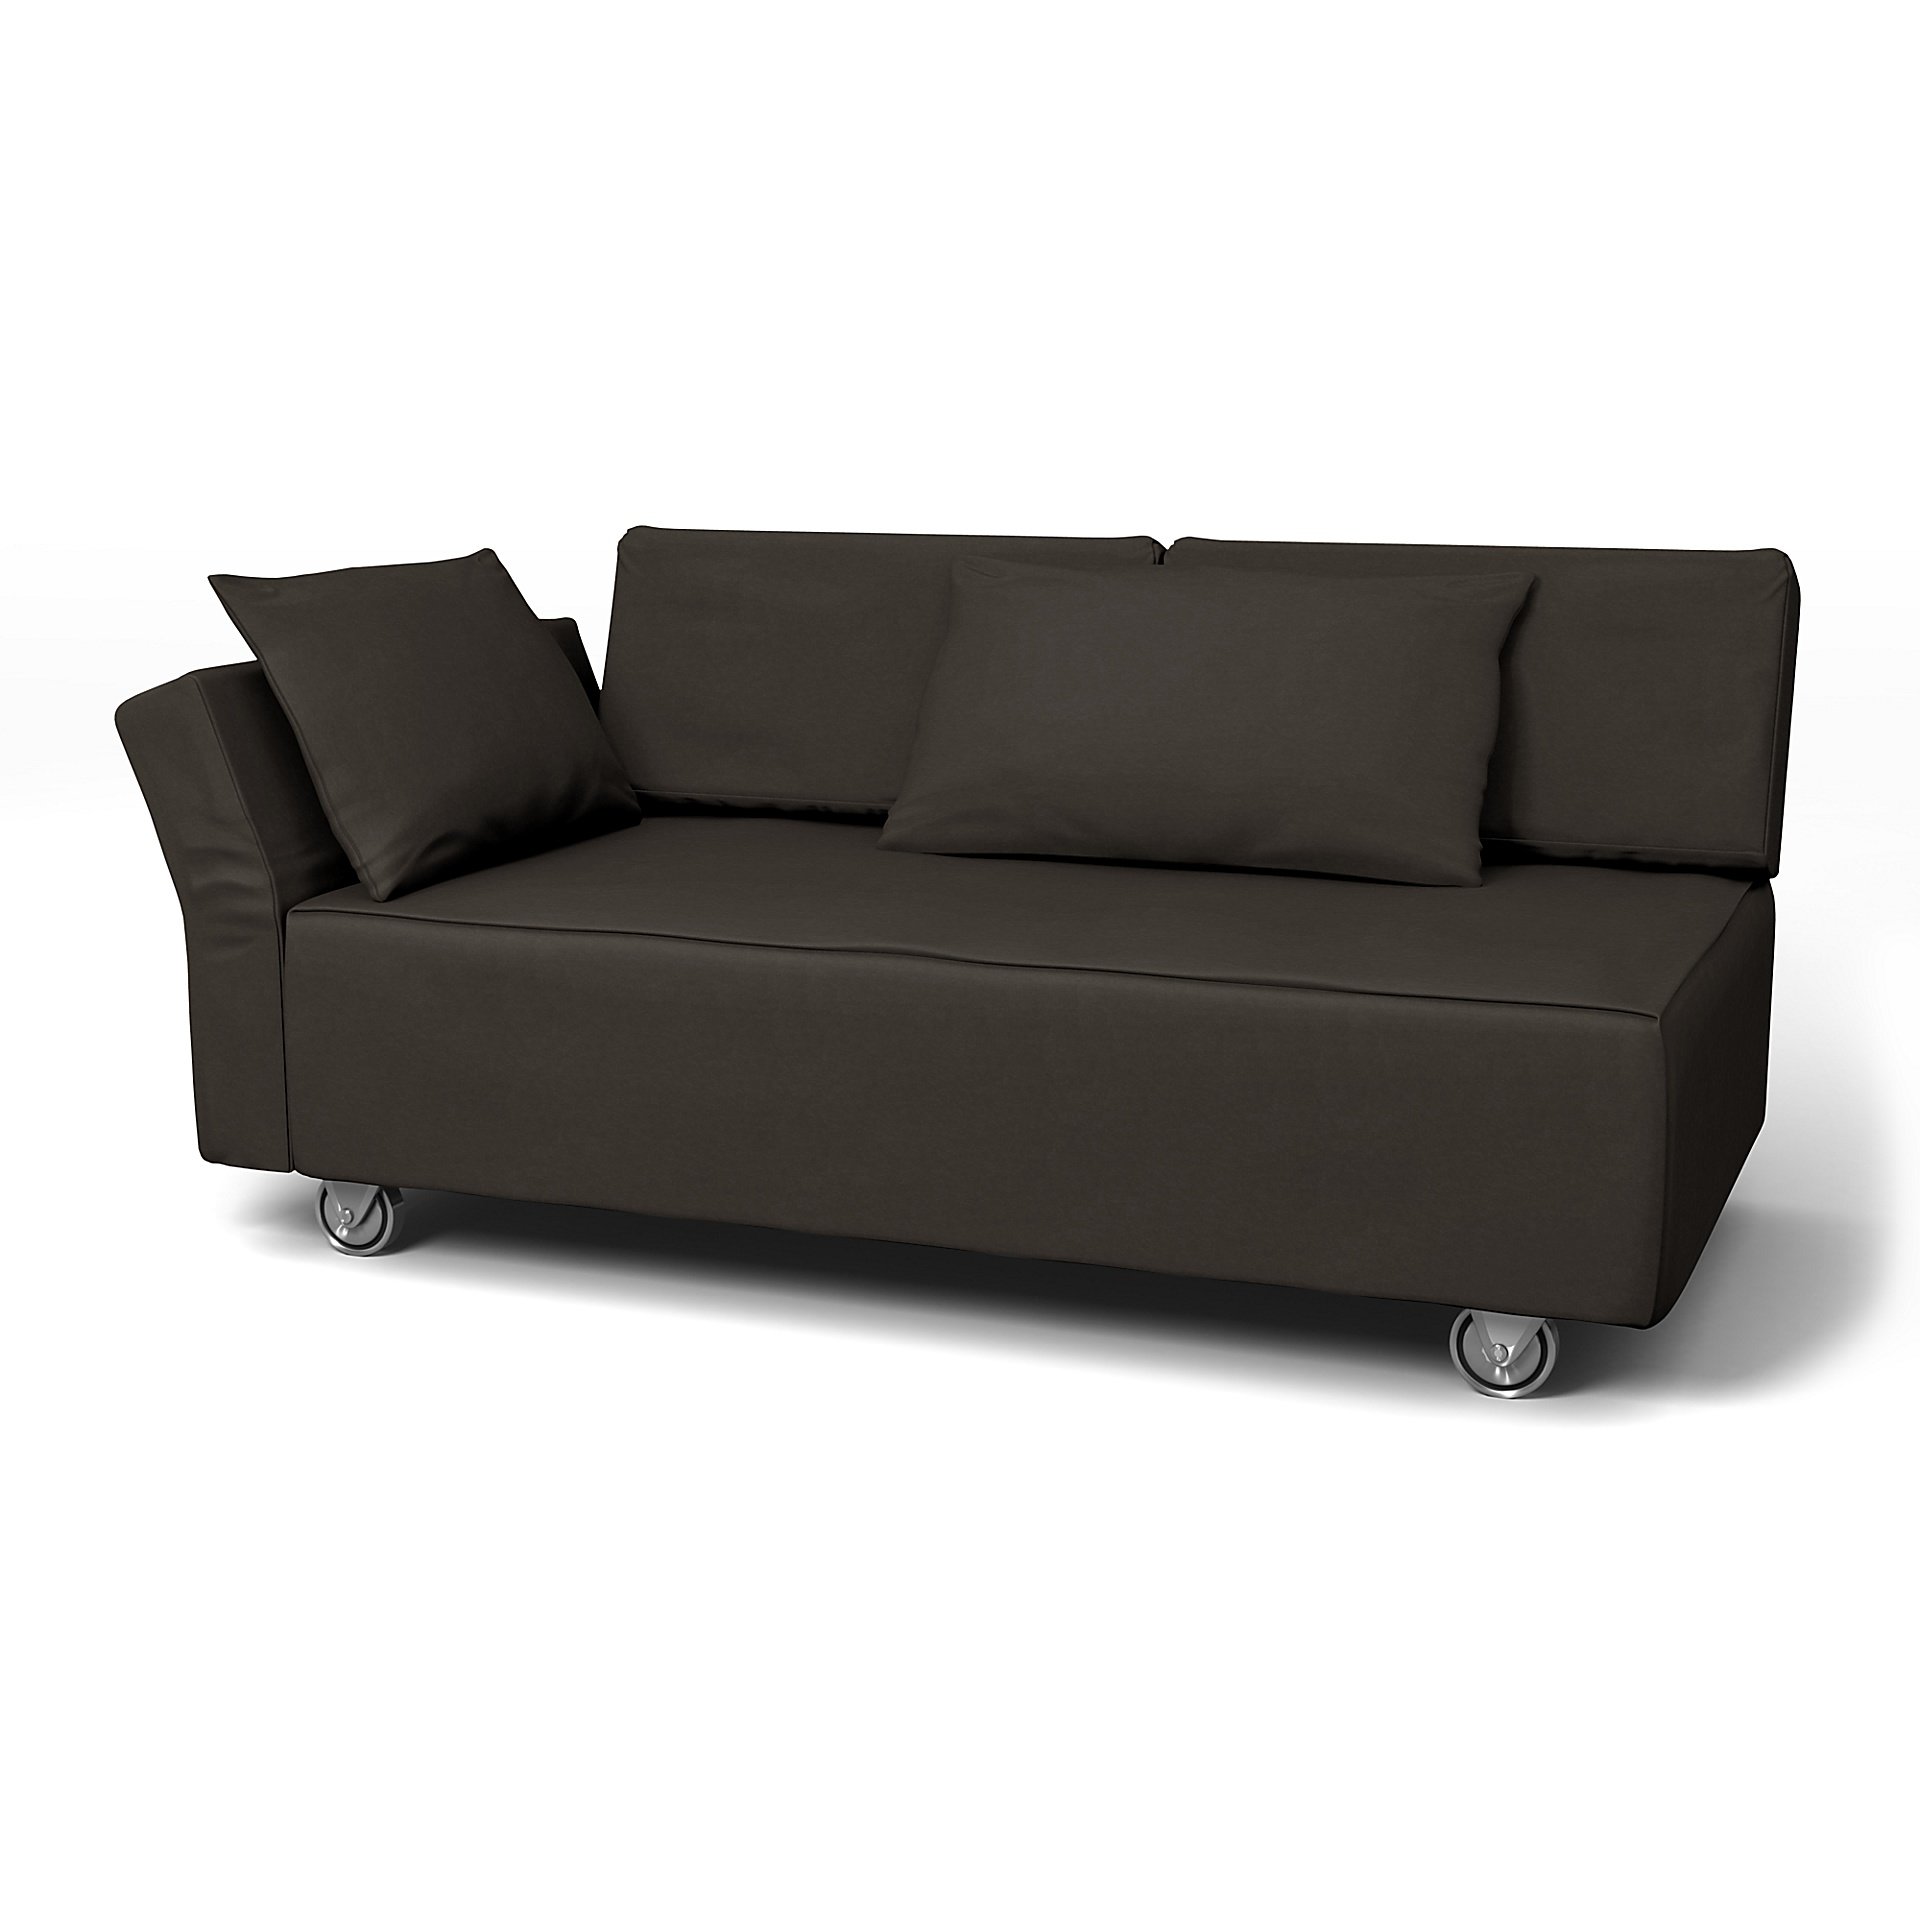 IKEA - Falsterbo 2 Seat Sofa with Left Arm Cover, Licorice, Velvet - Bemz